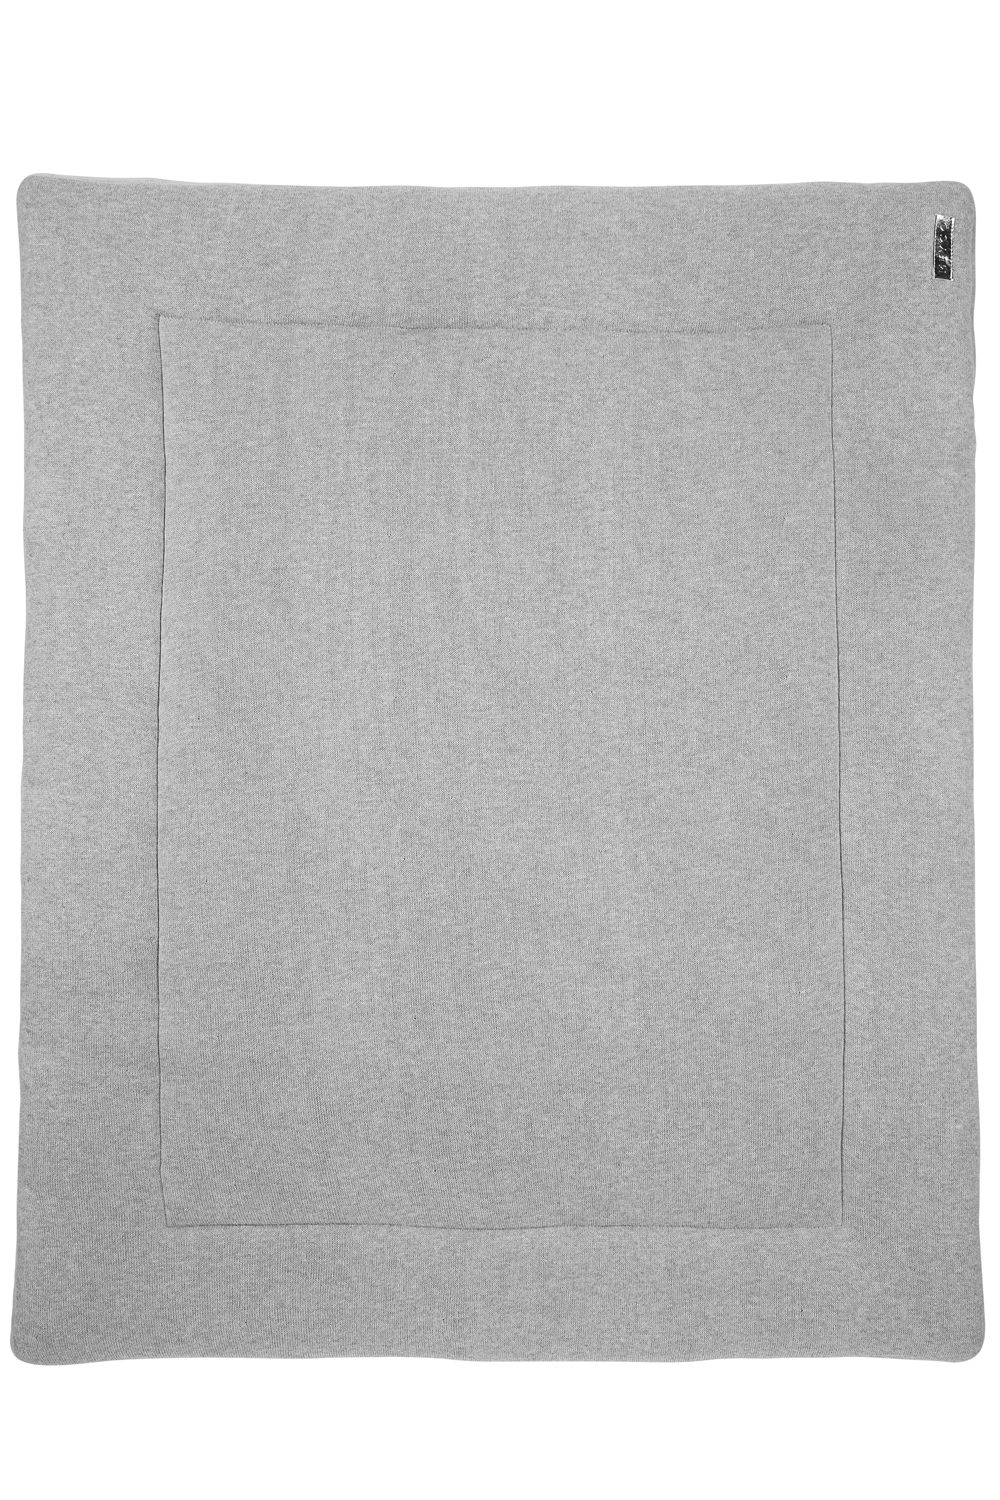 Boxkleed Knit Basic - Grijs Melange - 77x97cm